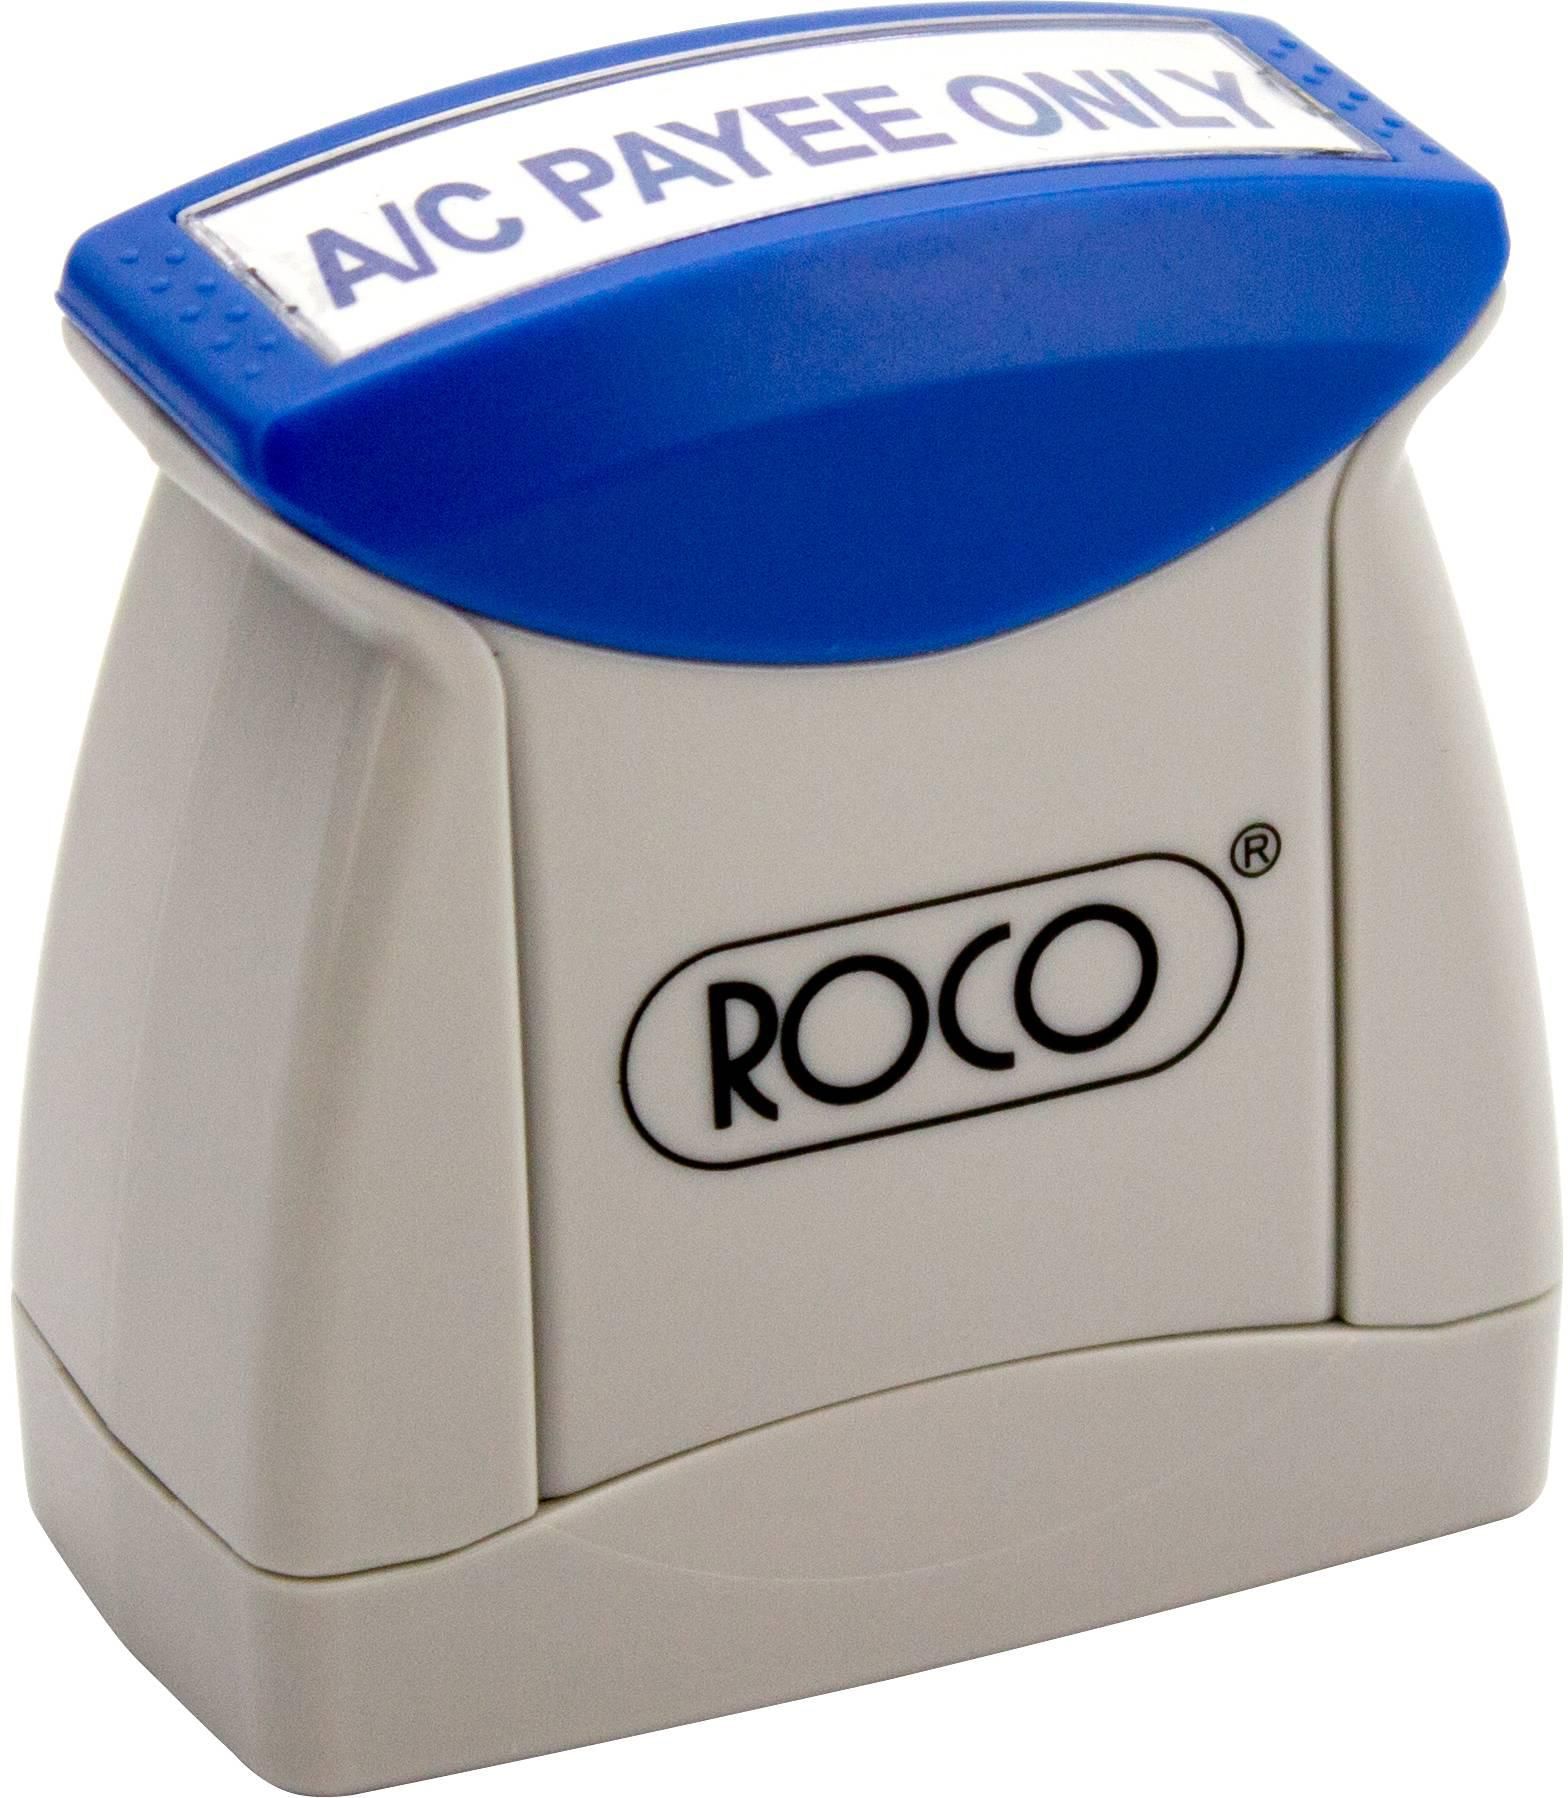 Roco Self Inking Stamp